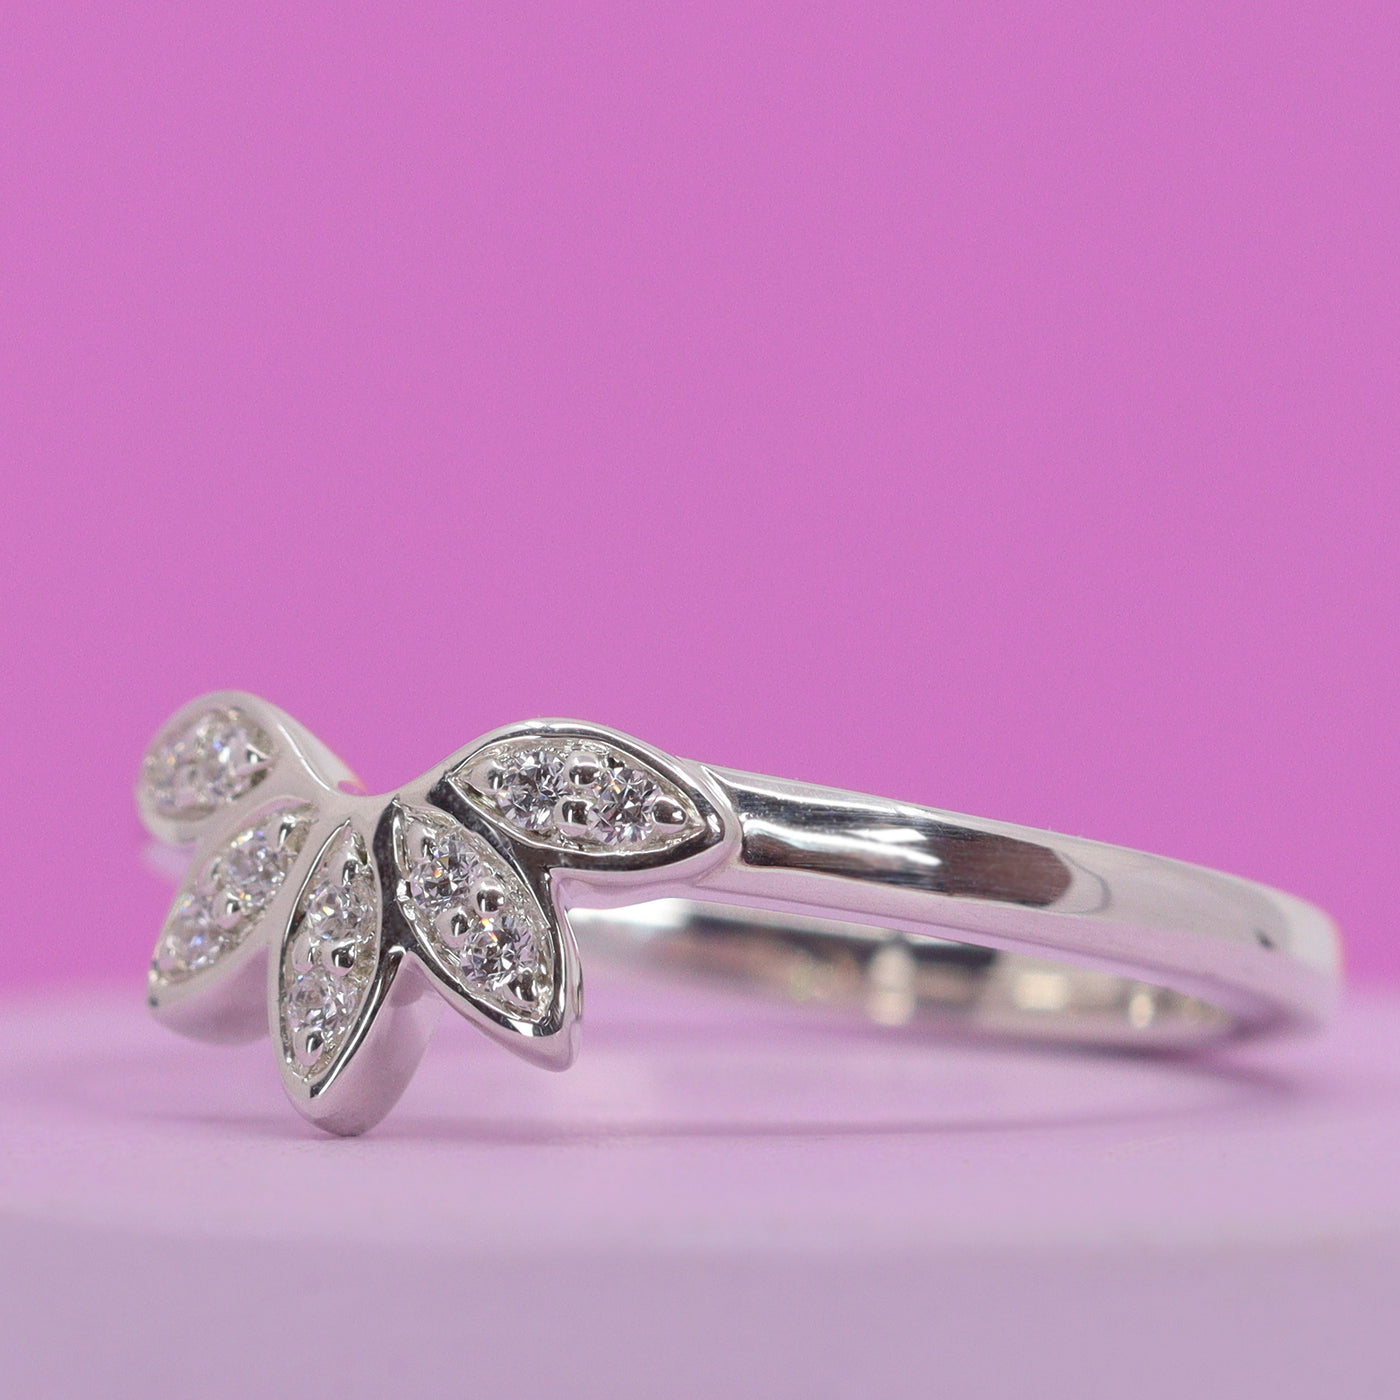 Beatrice - Petals Floral Diamond Set Tiara Style Wedding Ring - Made-to-Order